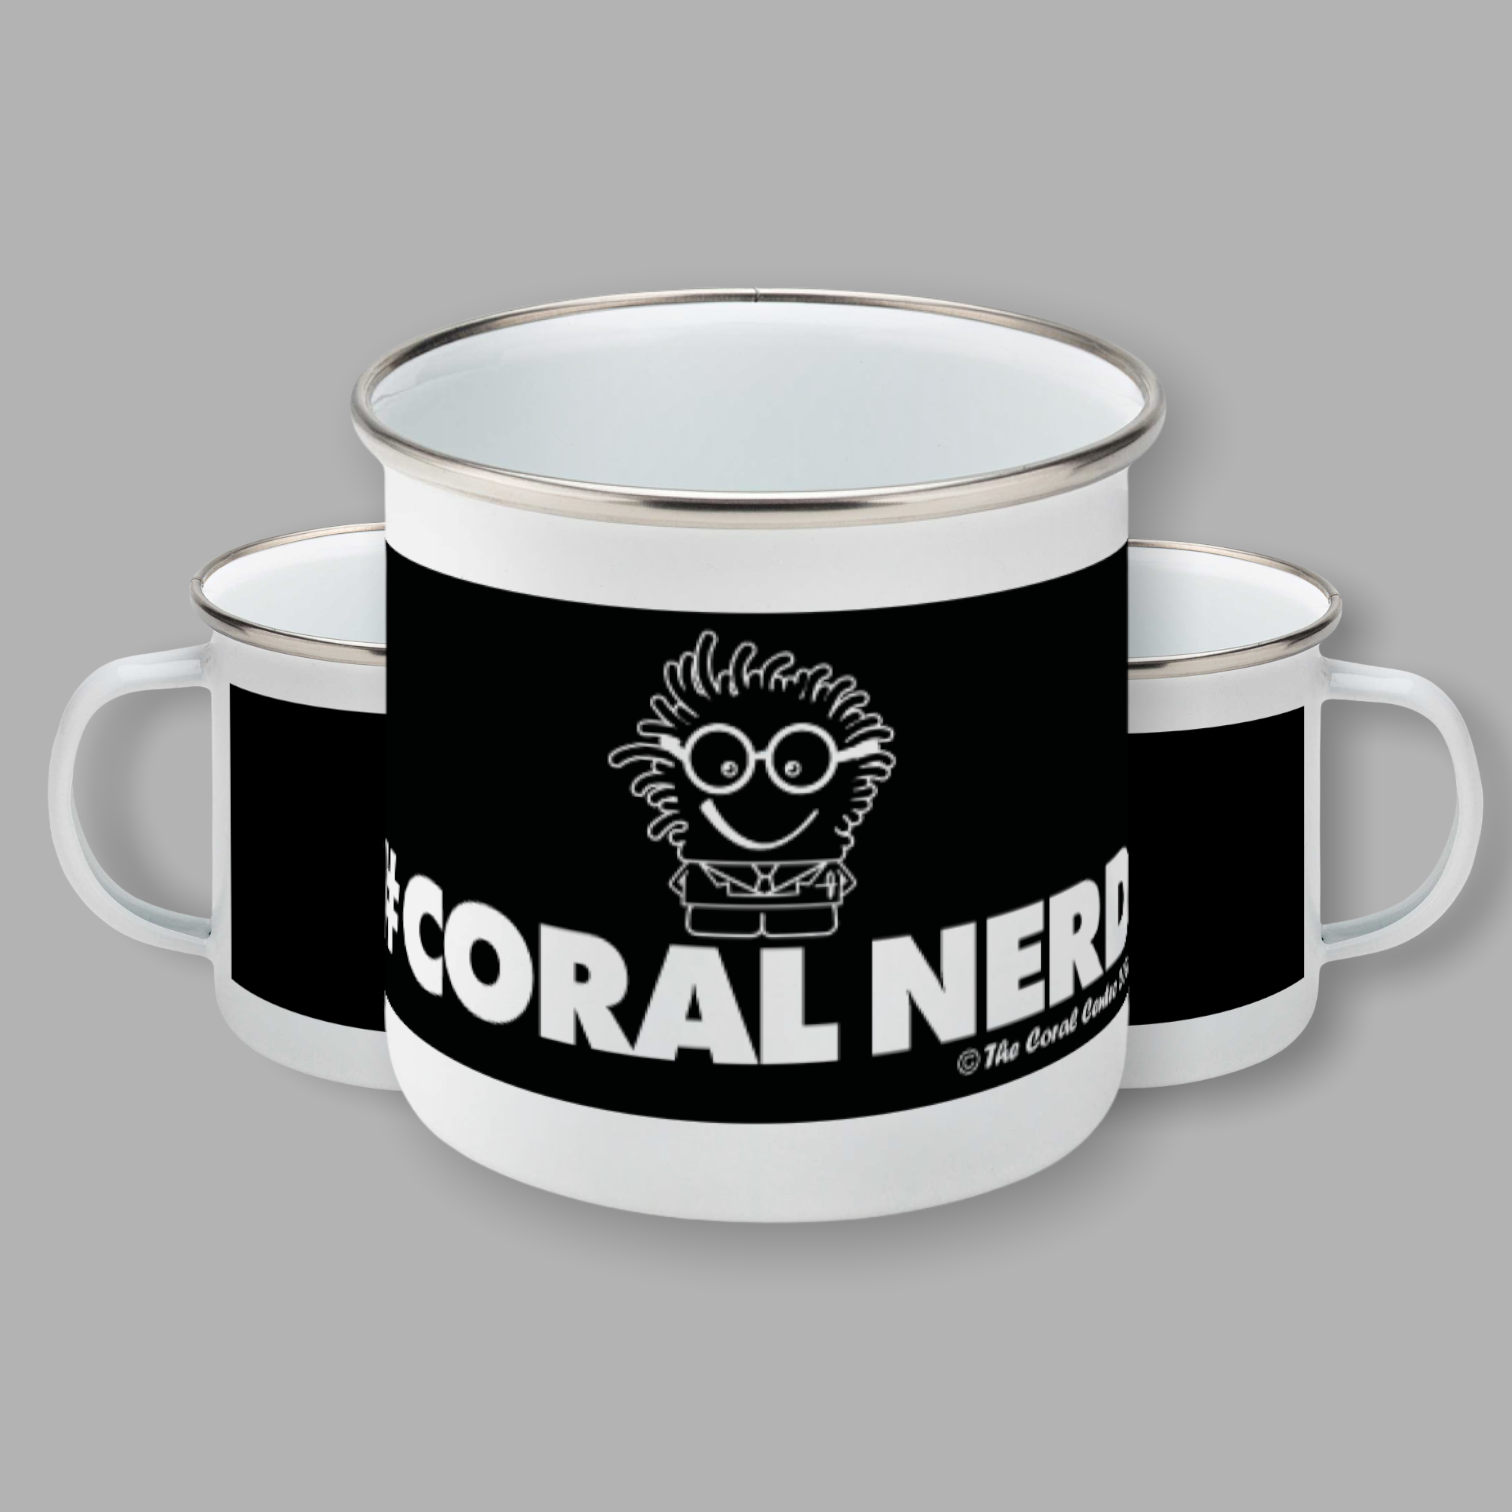 Coral Nerd Enamel Mug Autumn 2021